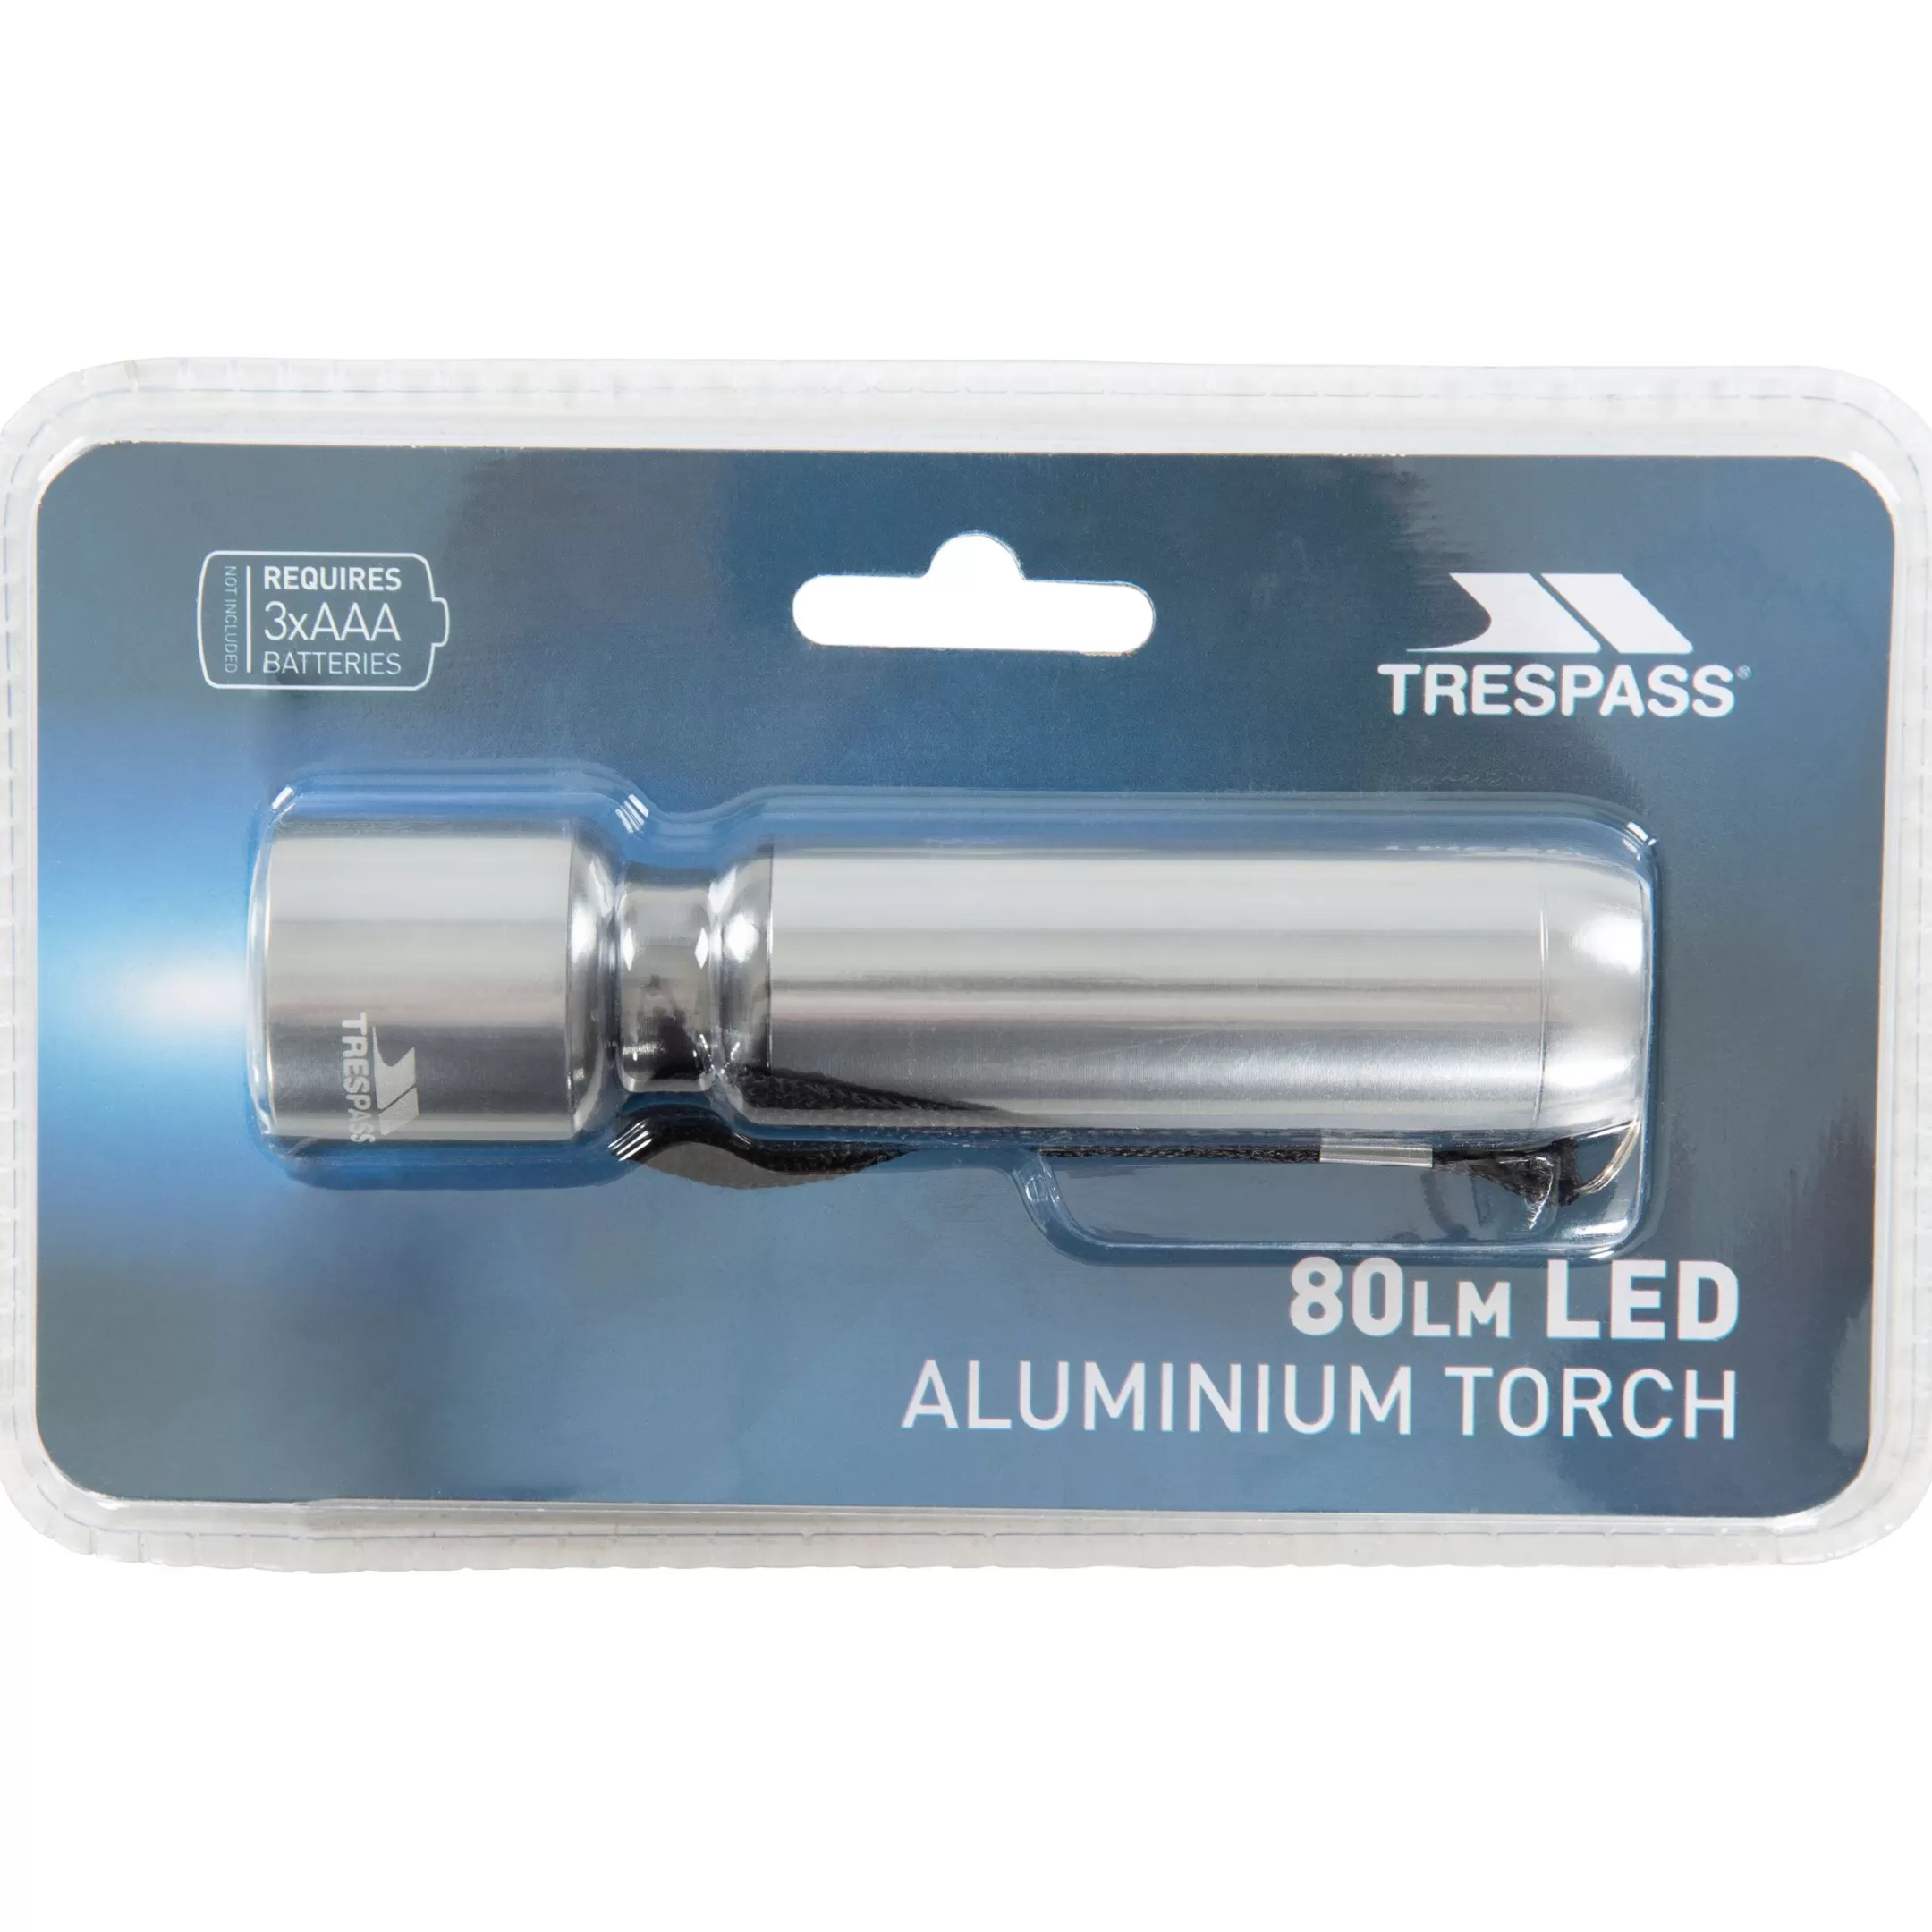 80LM LED Travel Torch | Trespass Cheap